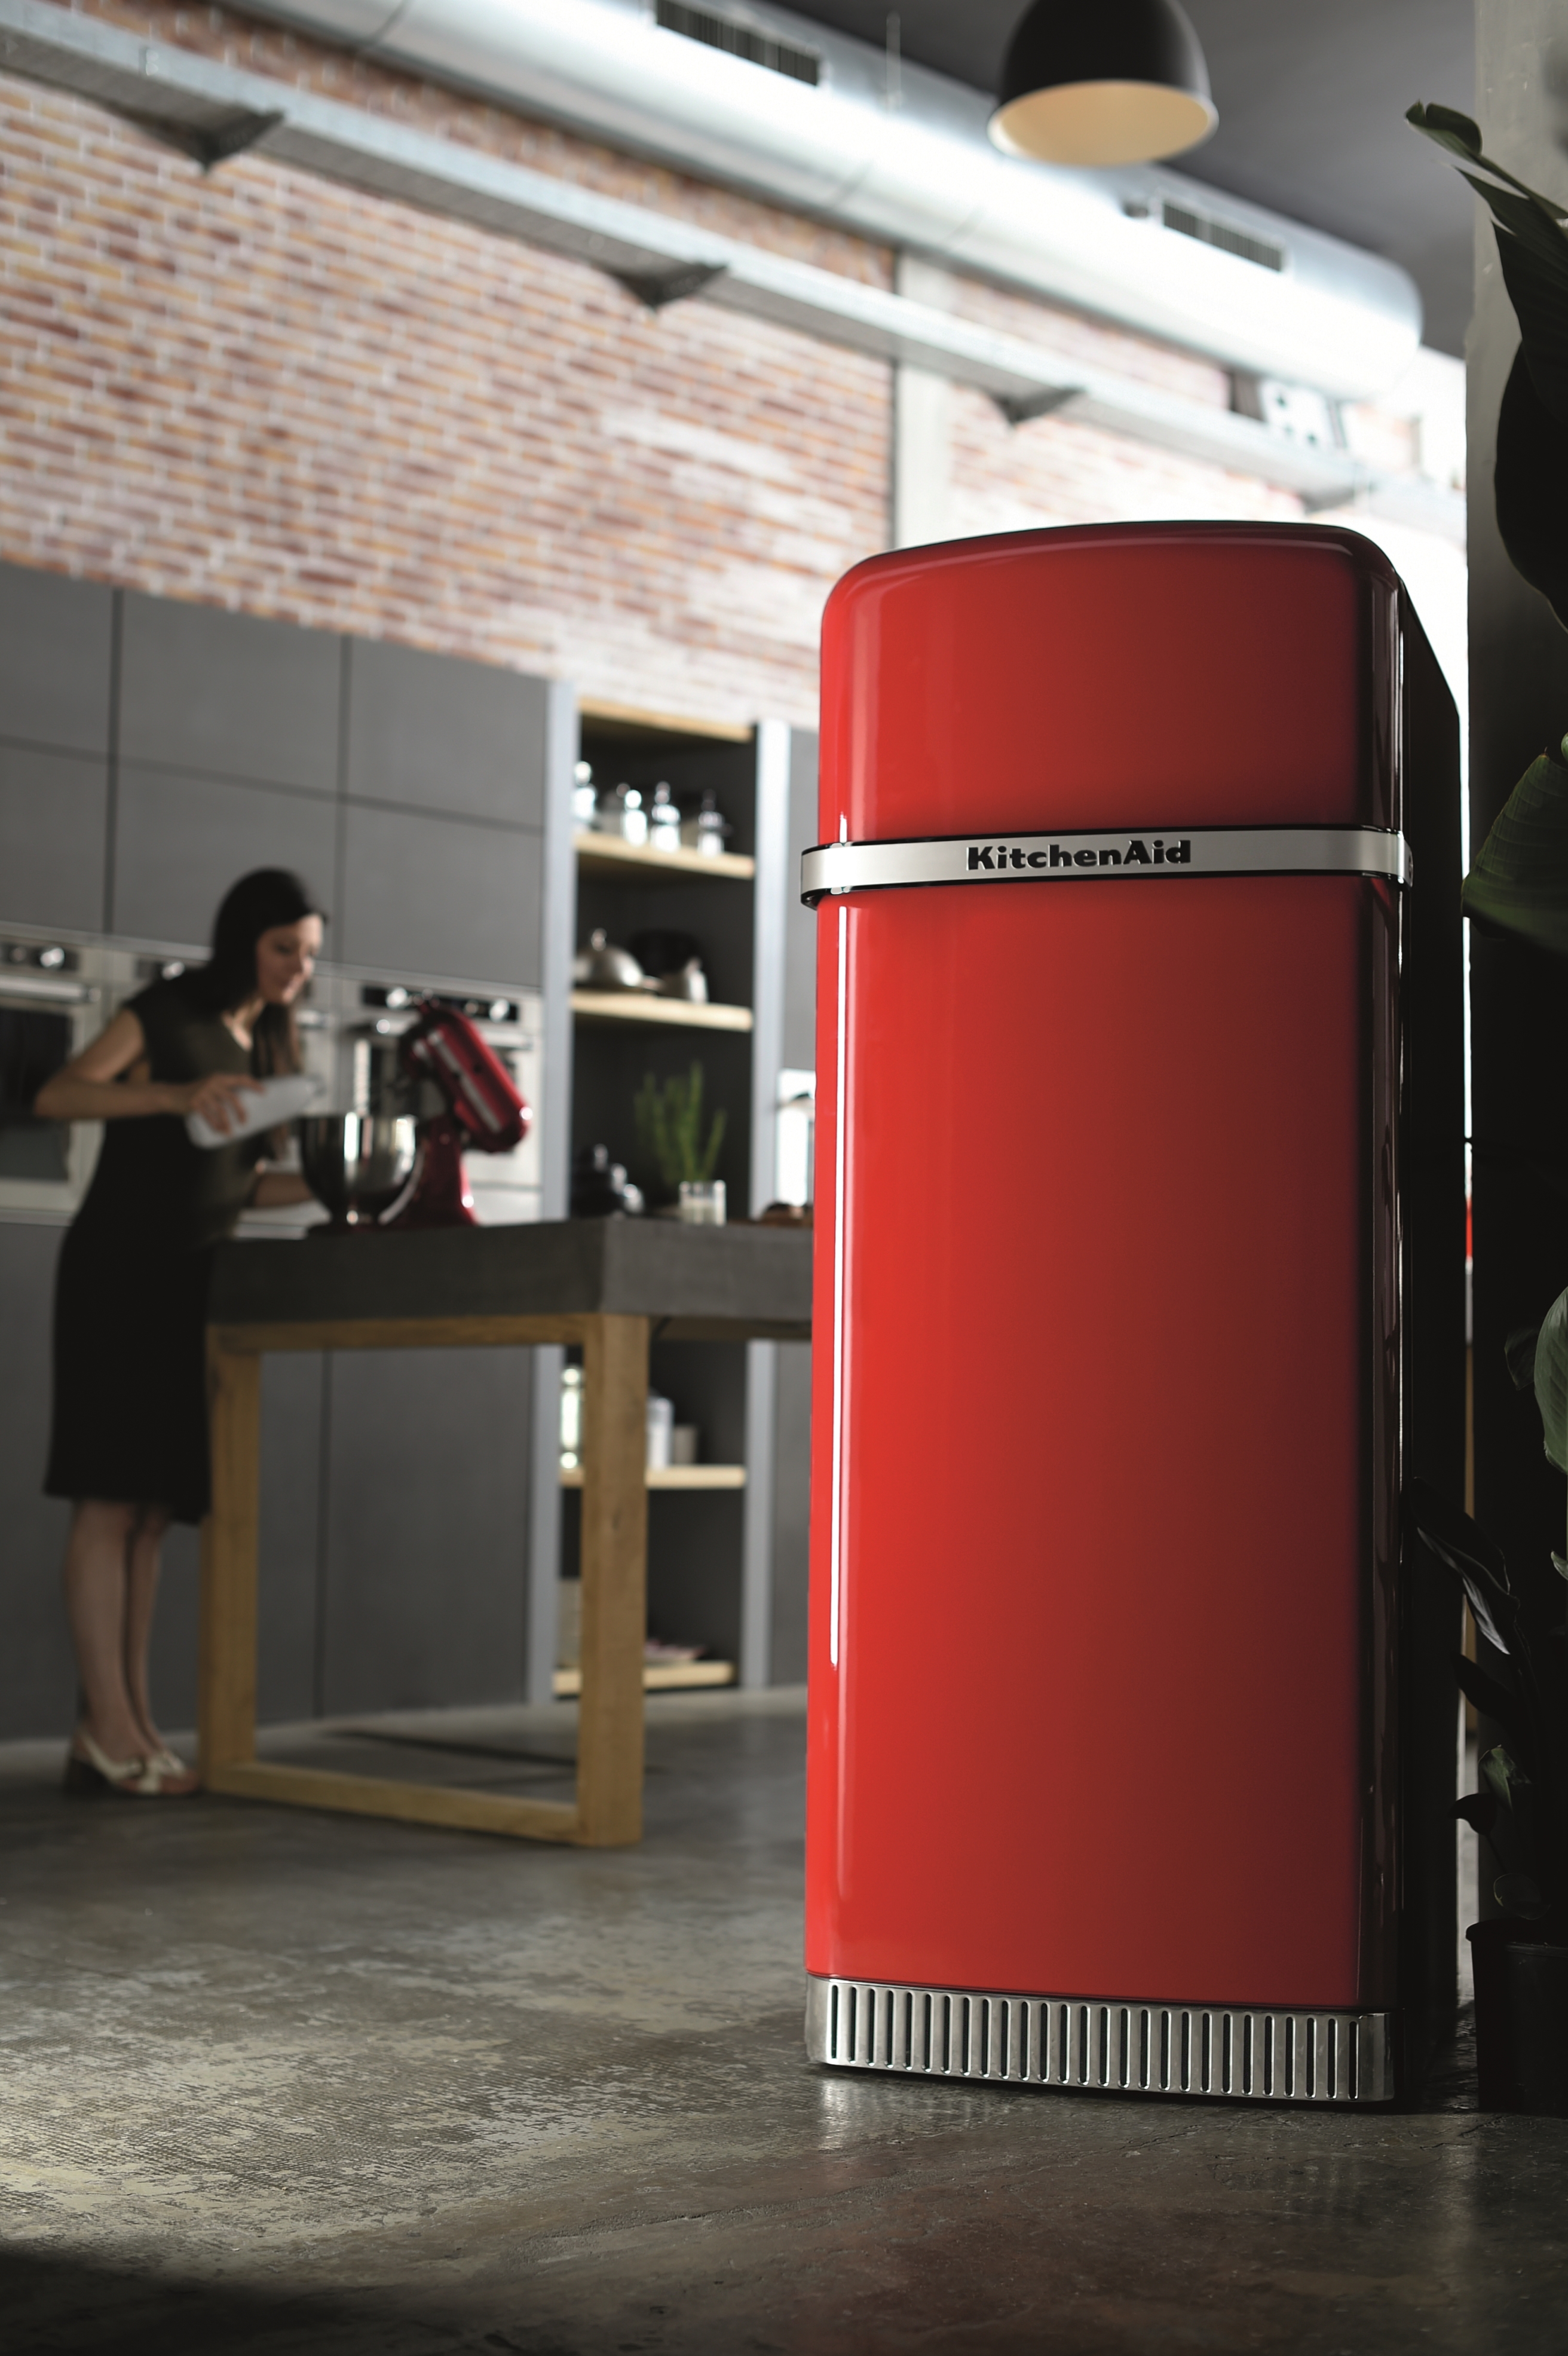 Iconic Fridge, a new icon by KitchenAid - Home Appliances World